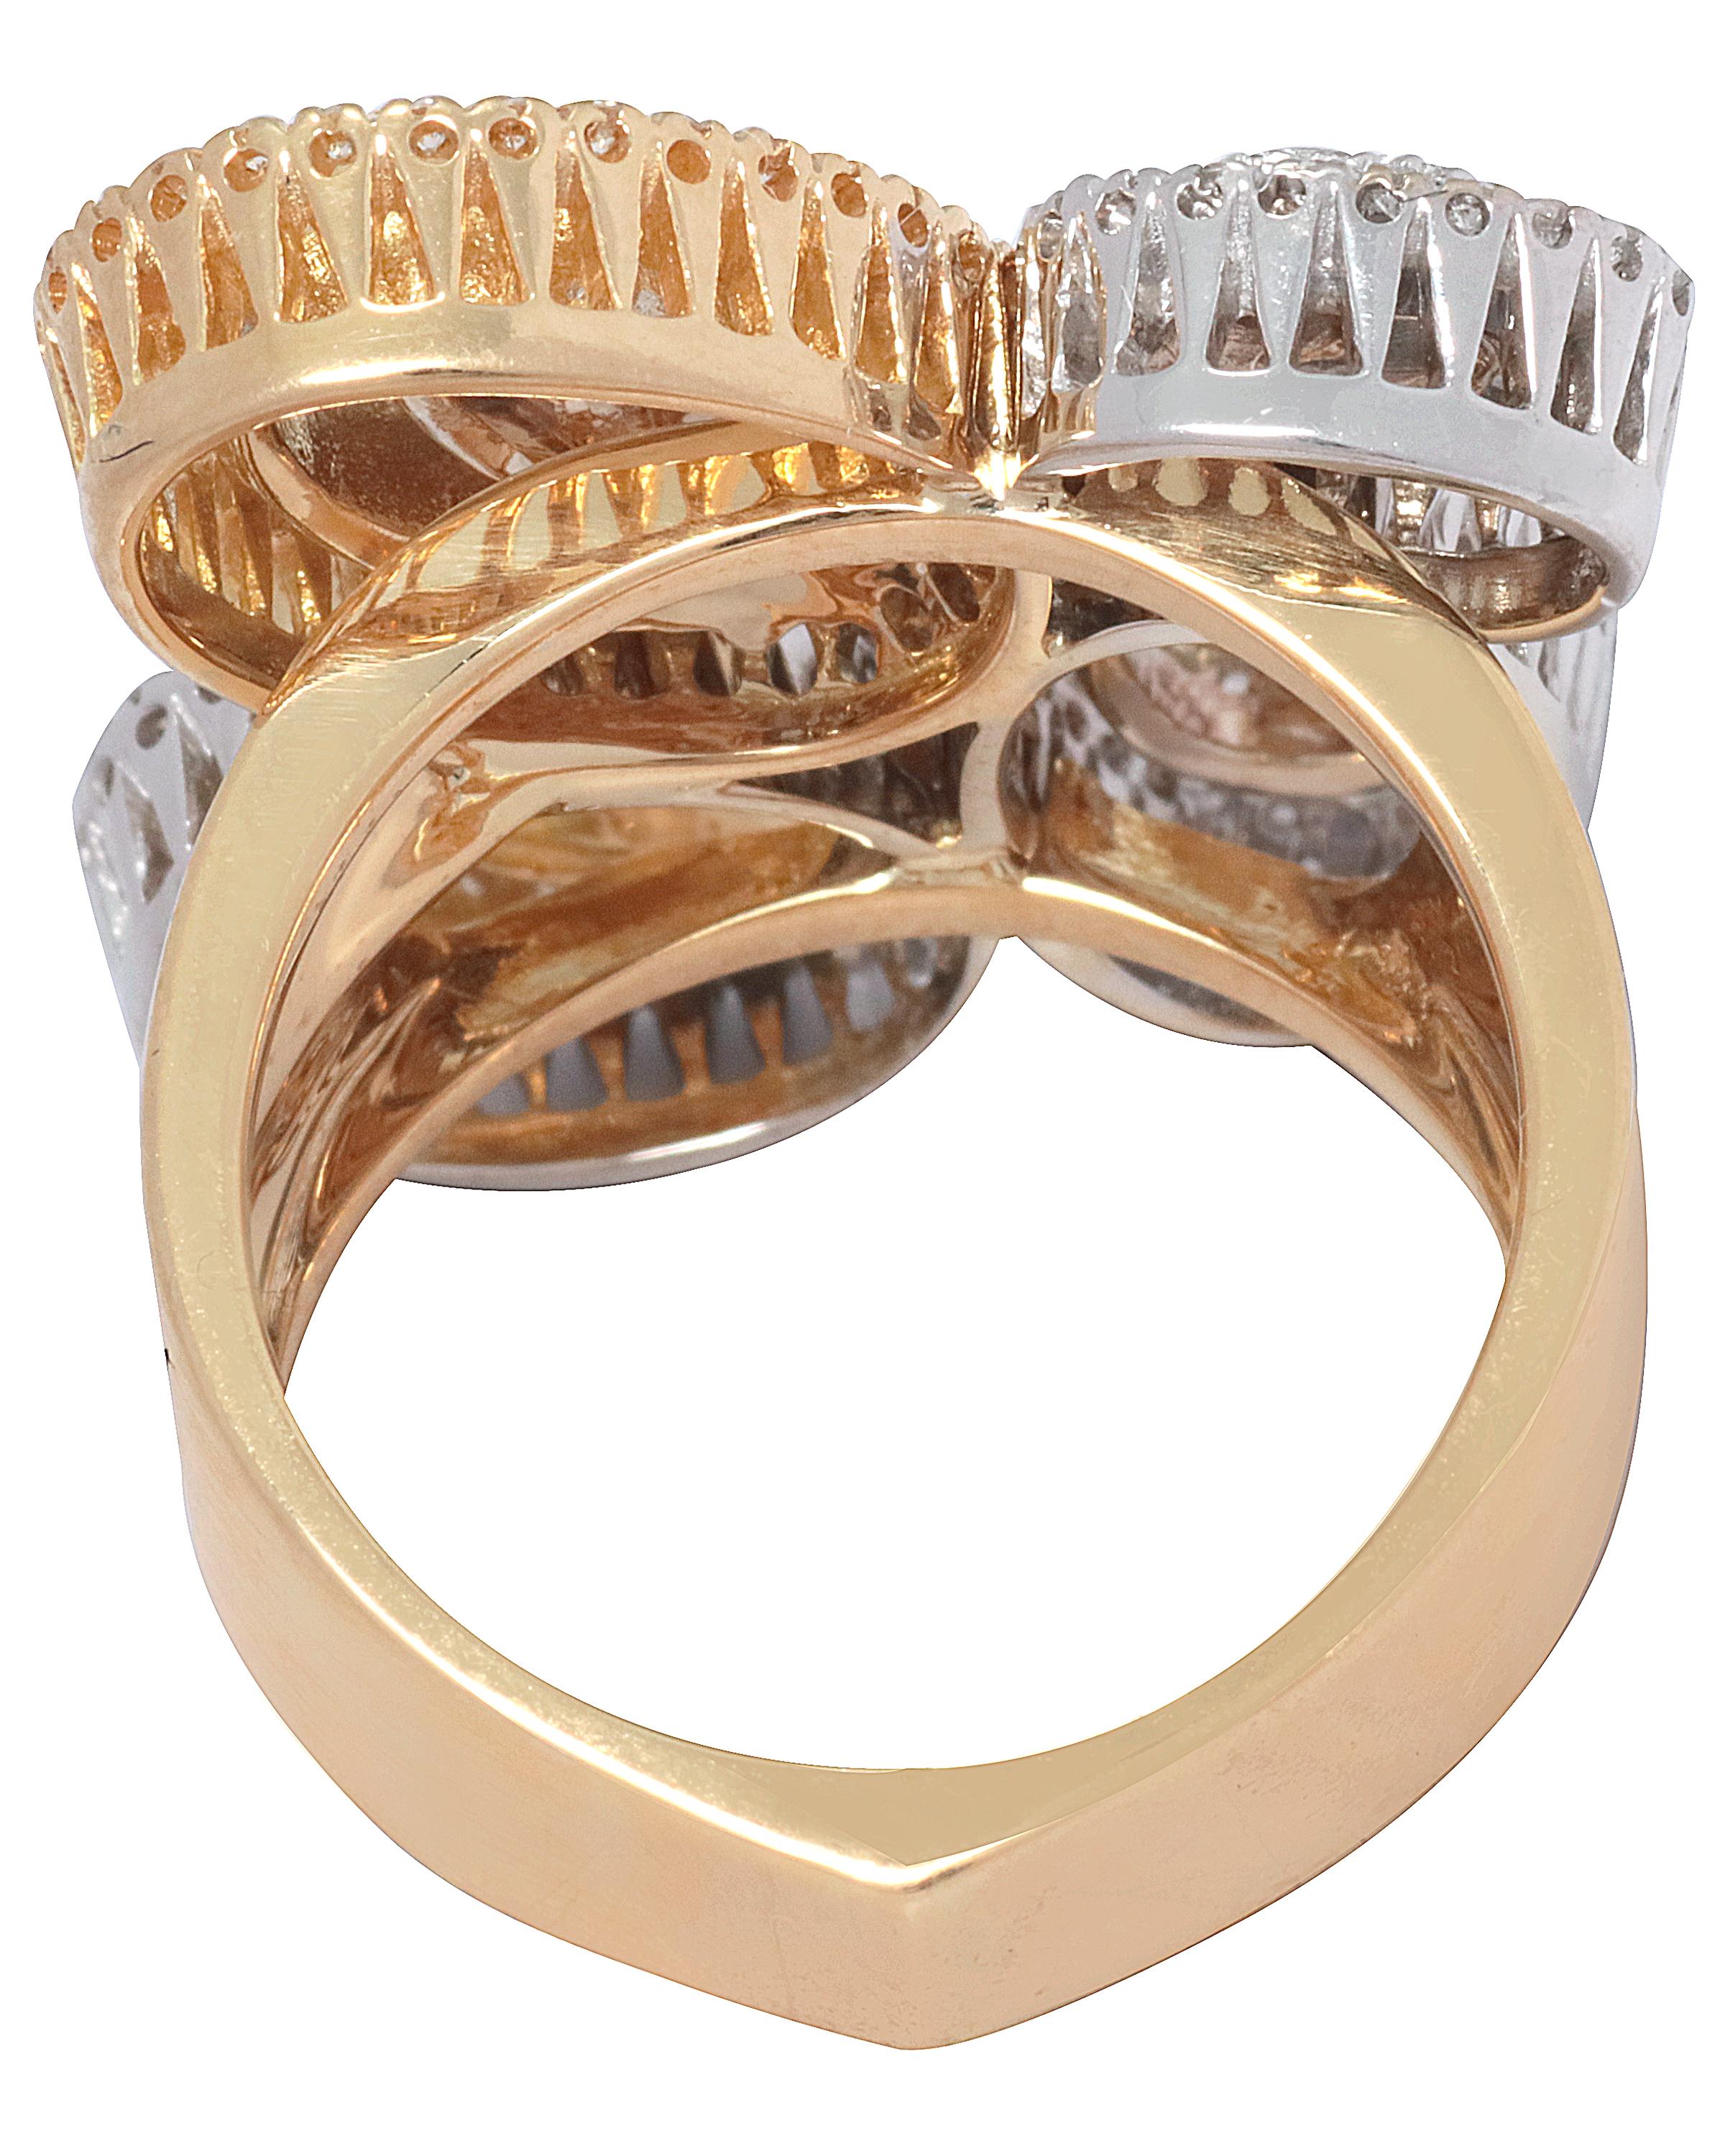 Ponte Vecchio Gioielli 18k White Gold Ring. Ring Size 7. Diamond(1.14tcw). Shipped in Ponte Vecchio Gioielli Box. Model Number SA2128 BRD-55 -  Manufacturers Suggested Retail $6,060